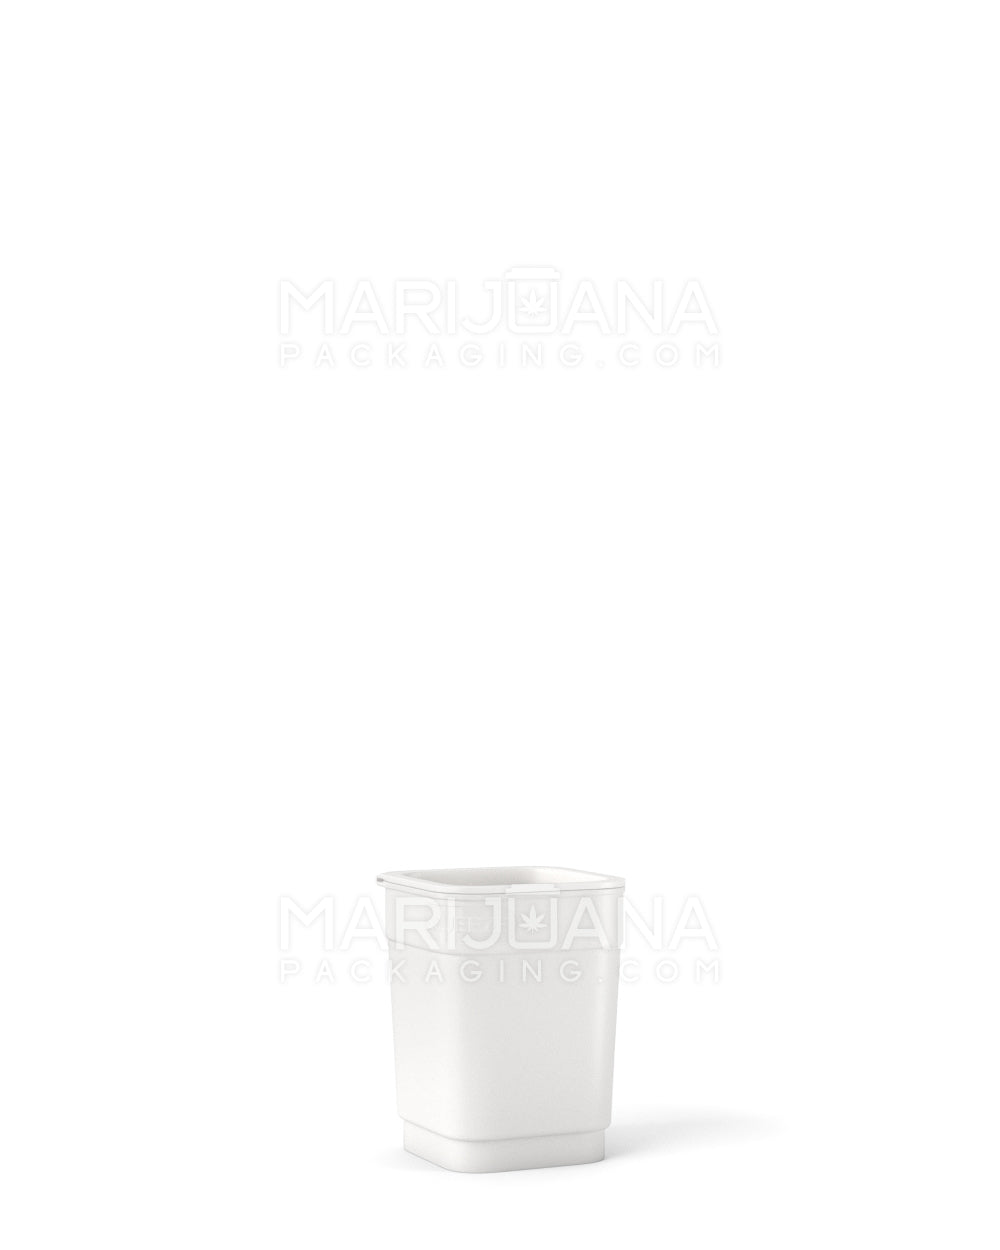 POLLEN GEAR | 100% Recyclable Opaque White Pop Box Pop Top Bottles | 6dr - 1g - 1632 Count - 4